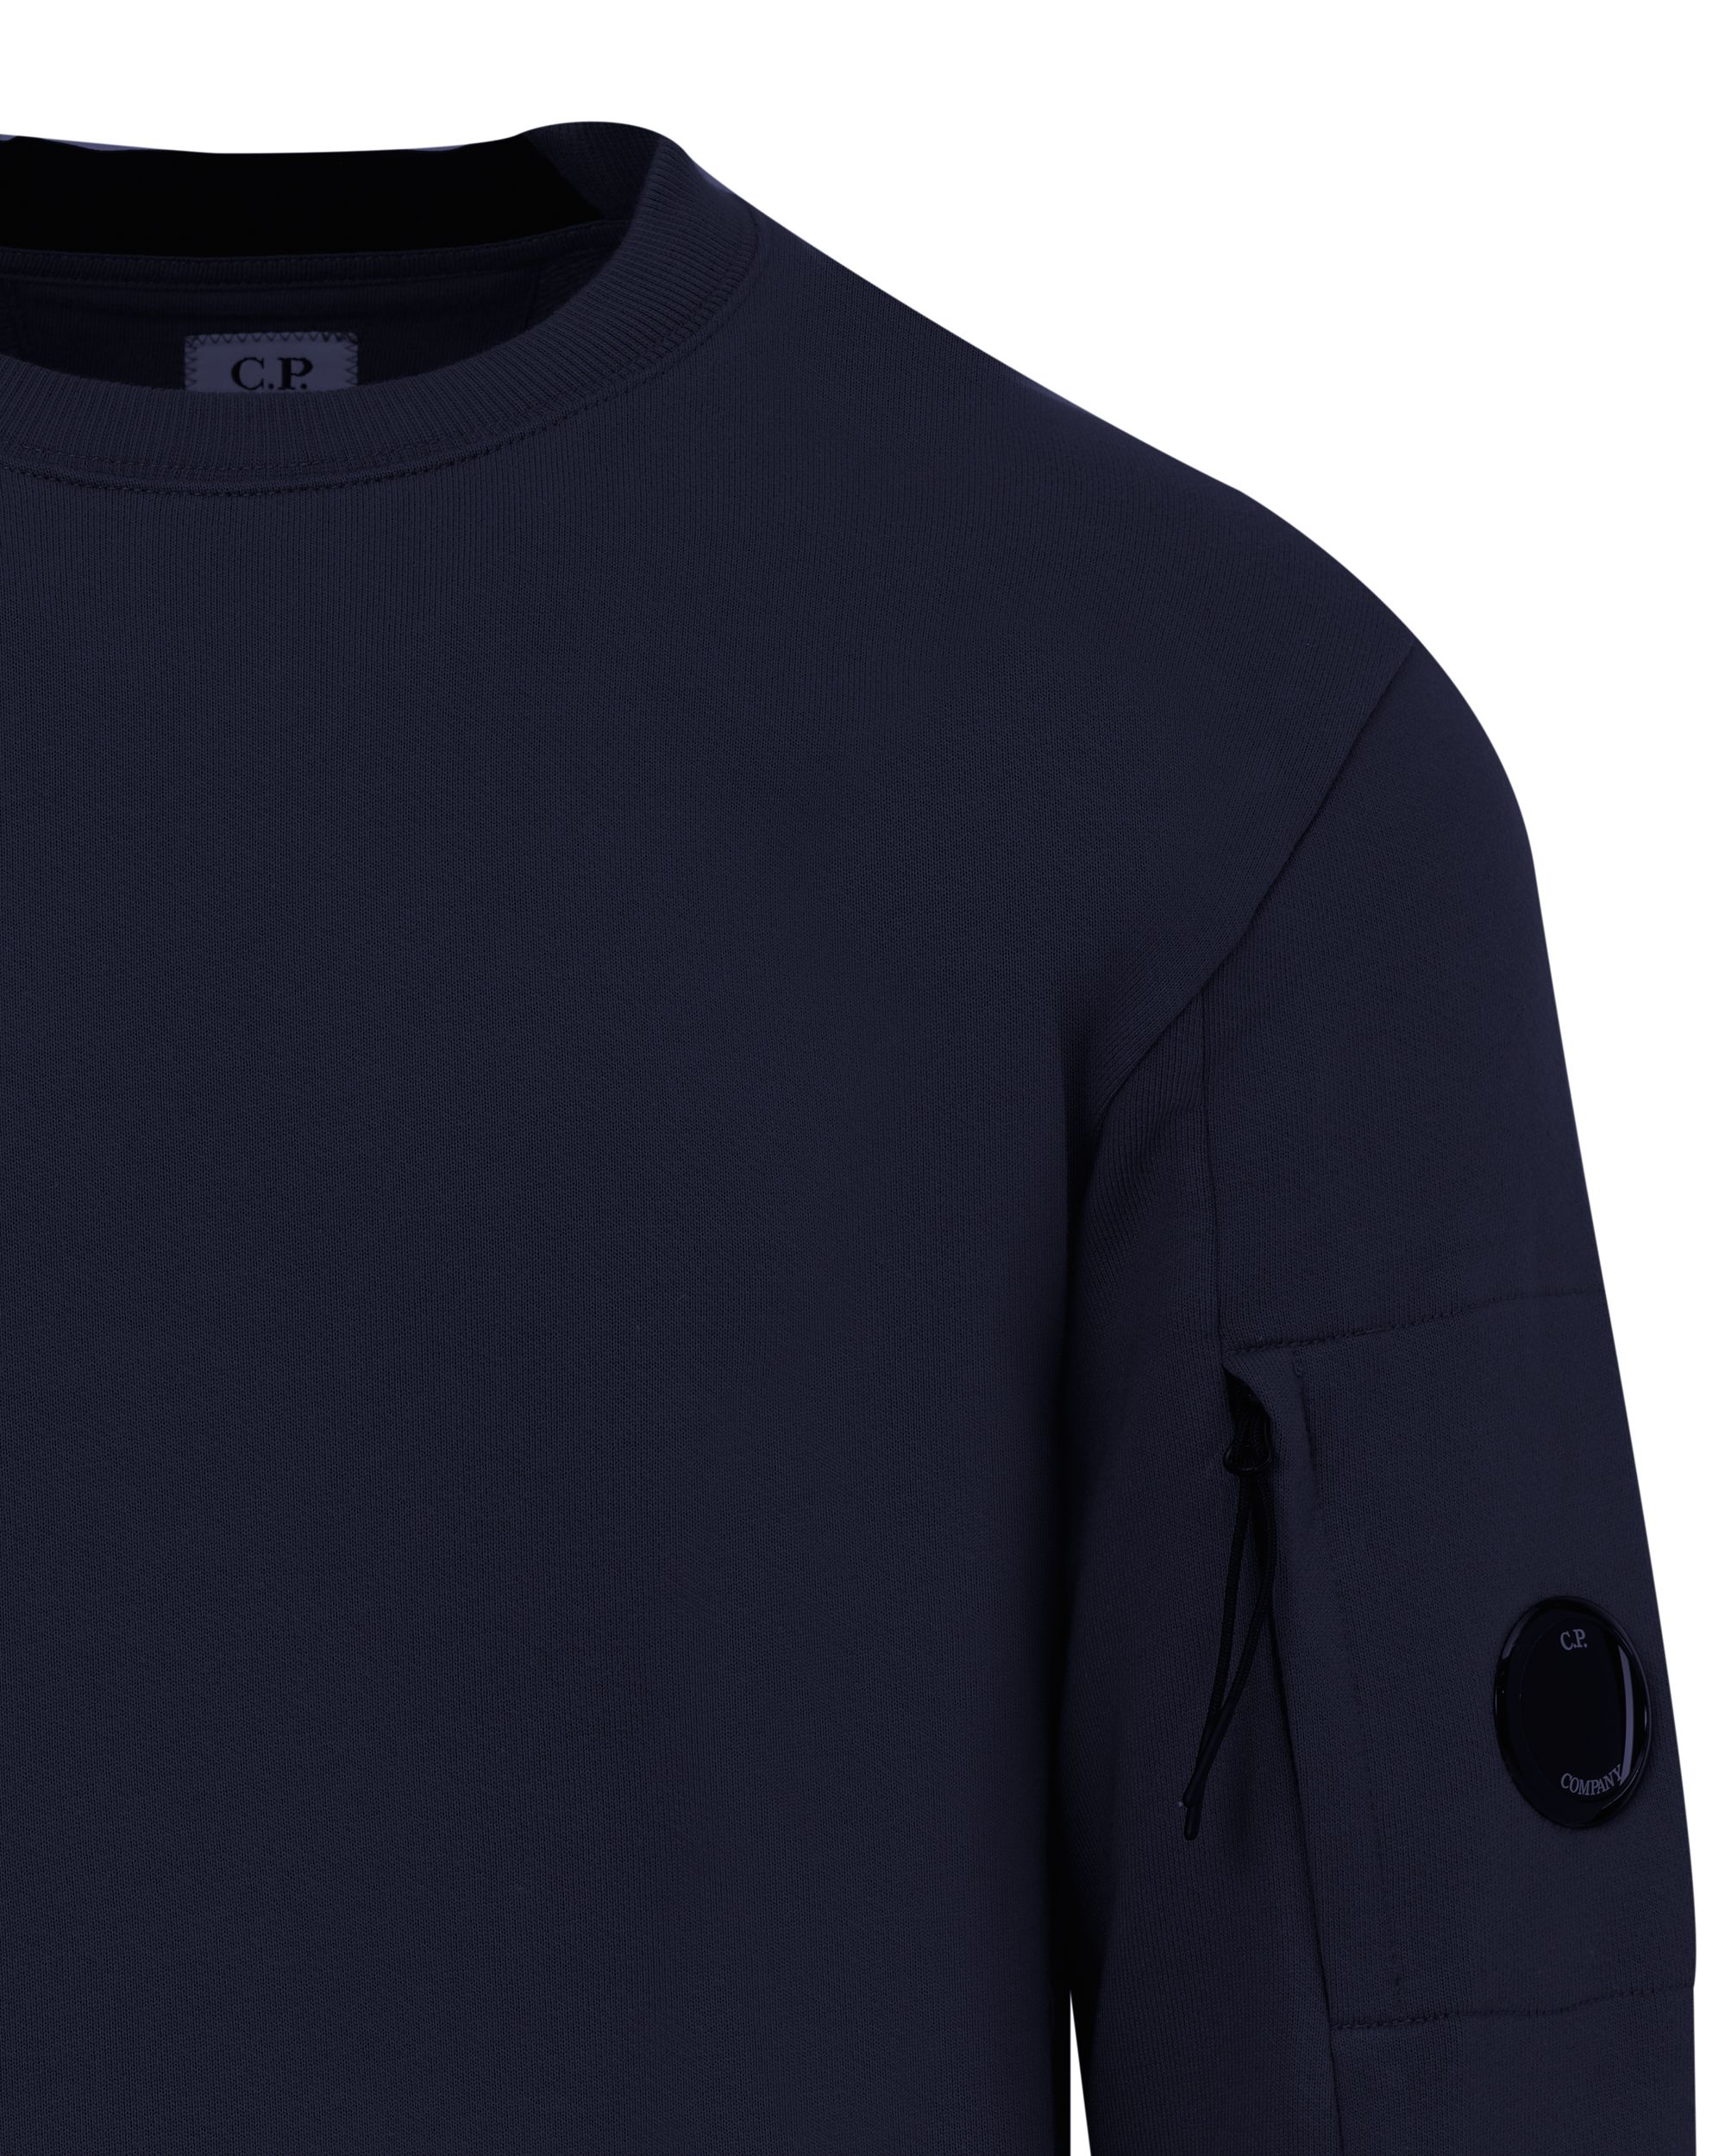 C.P Company Sweater Donker blauw 082129-001-L